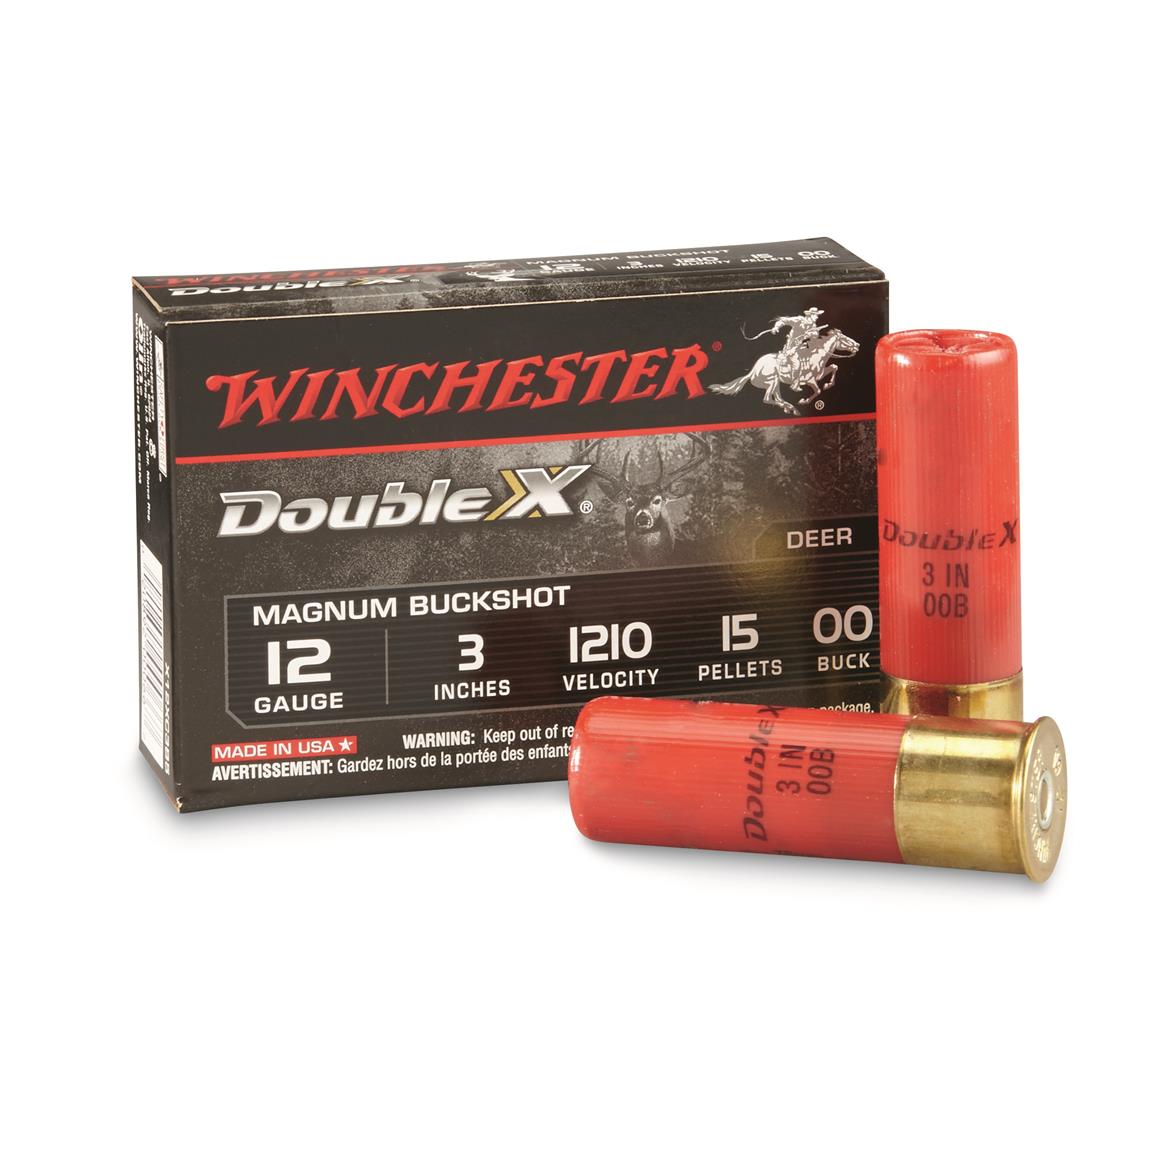 Winchester Double X Magnum Buckshot 12 Gauge 3 00 Buck 5 Rounds 95672 12 Gauge Shells At